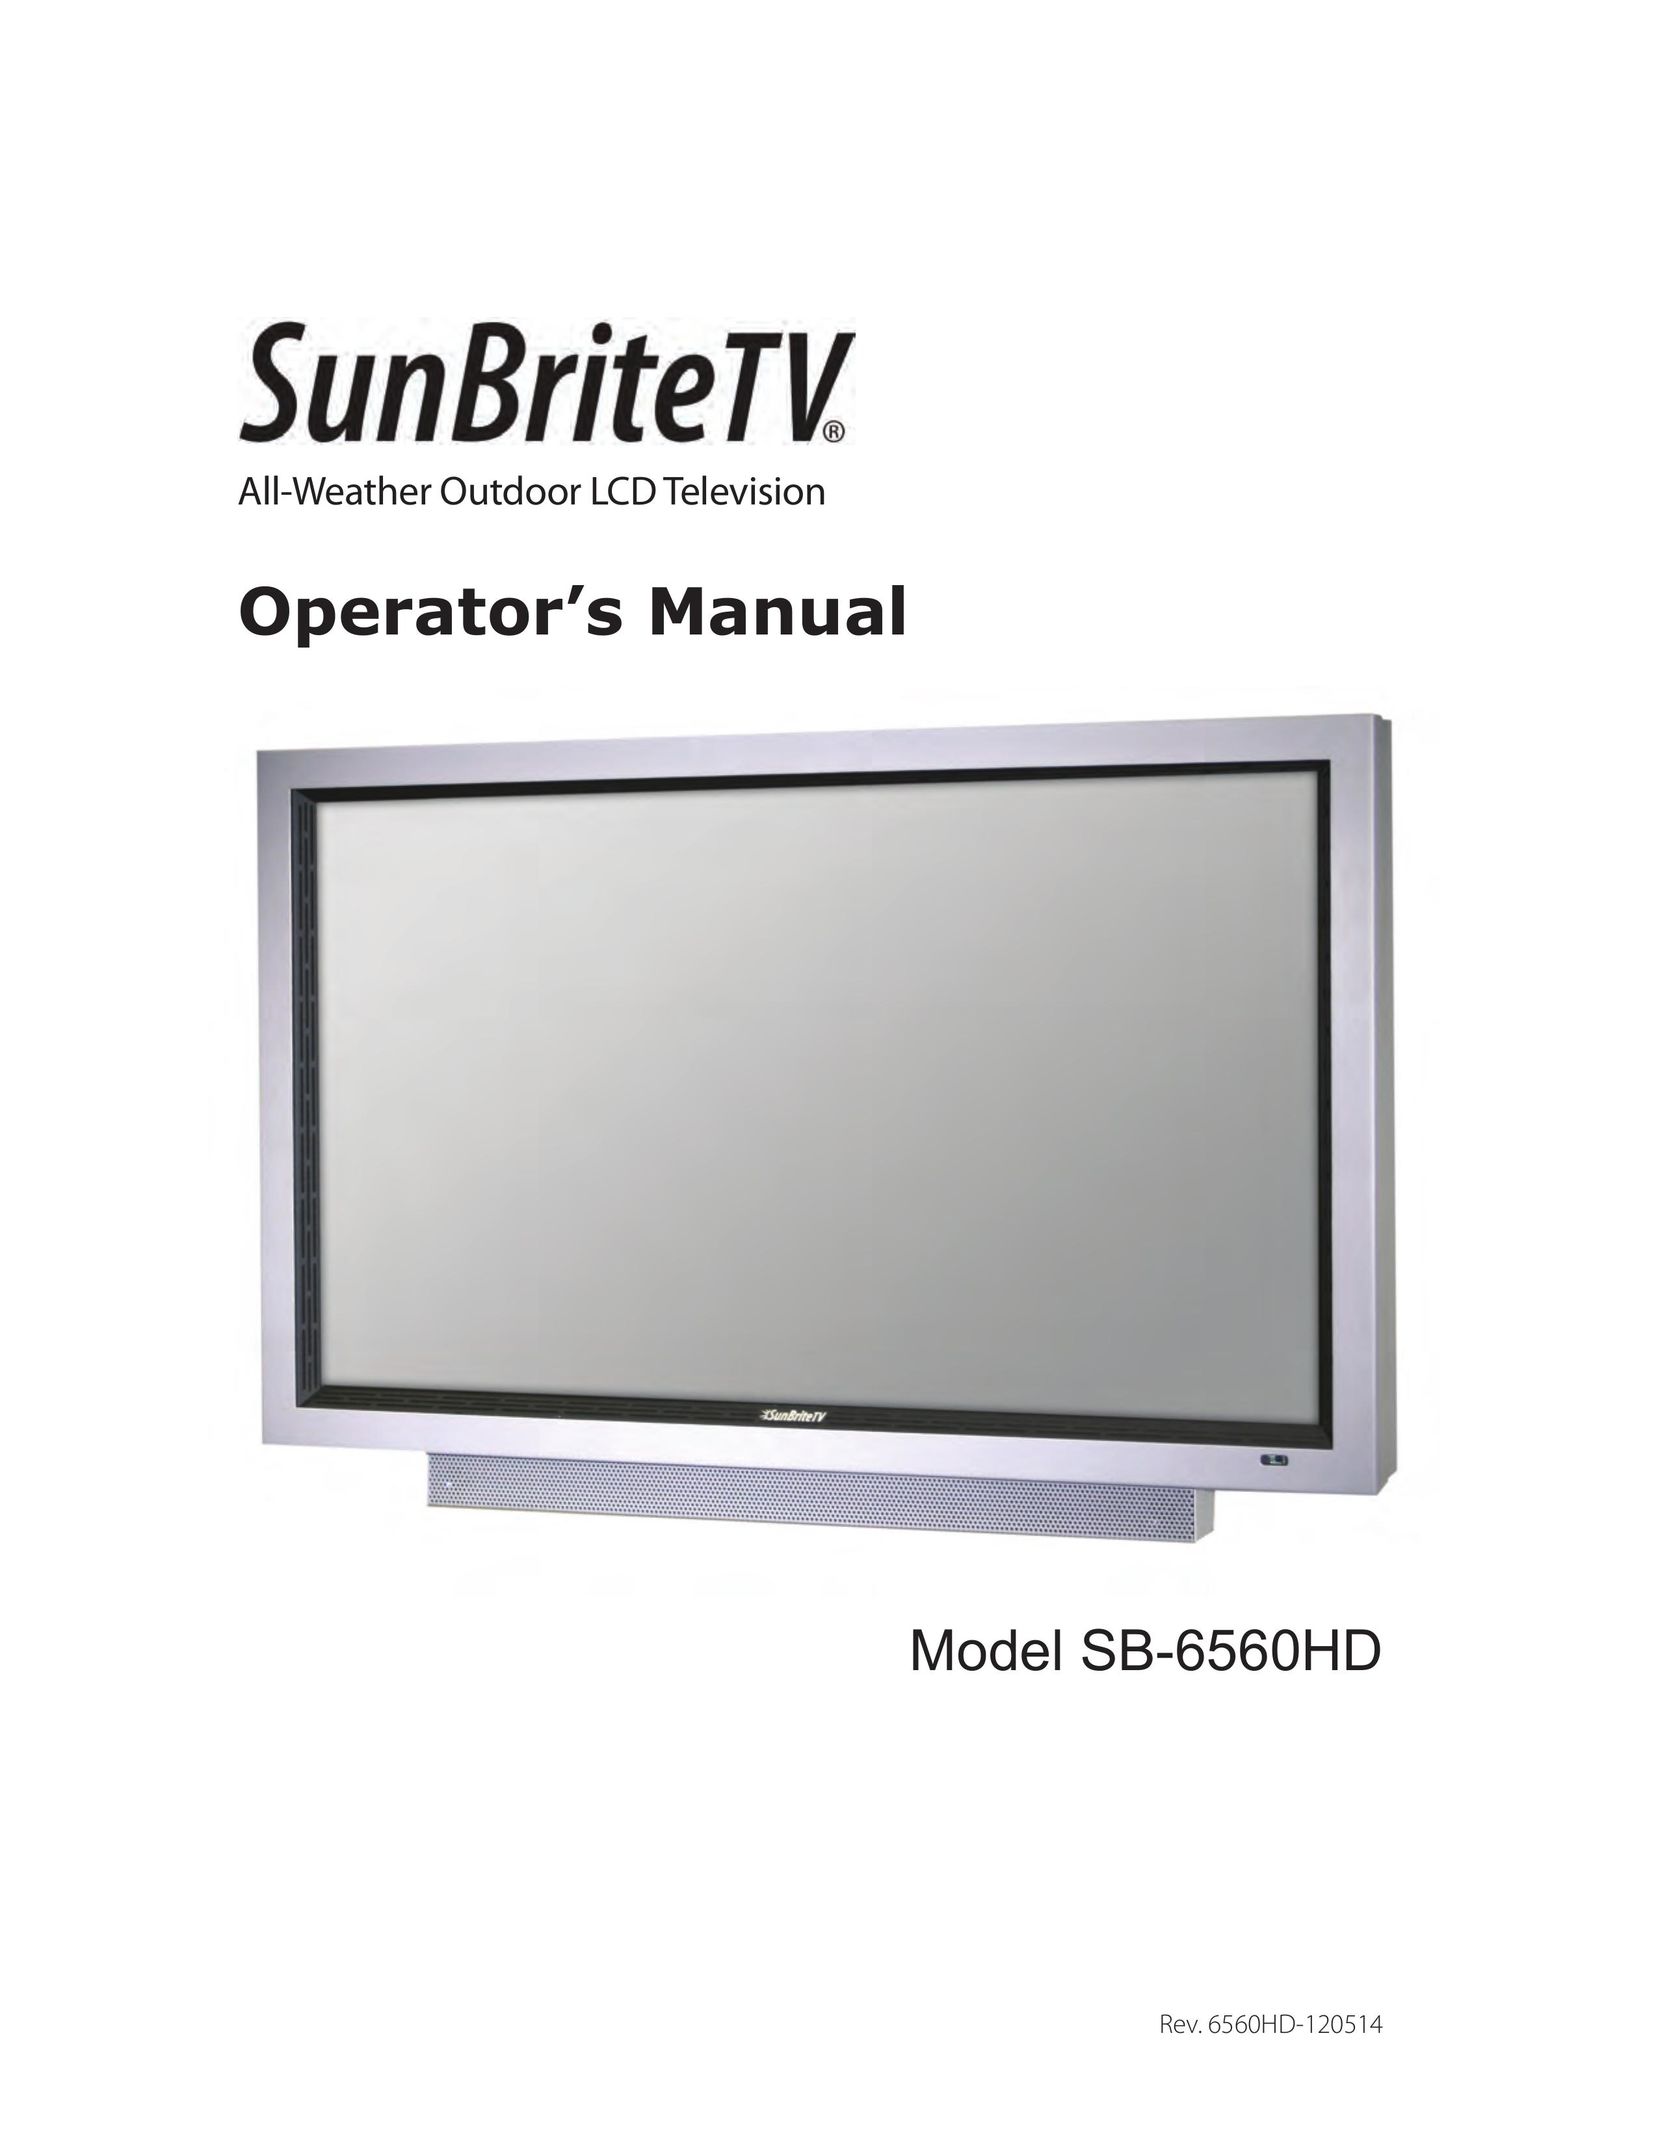 SunBriteTV SB-6560HD-SL Flat Panel Television User Manual